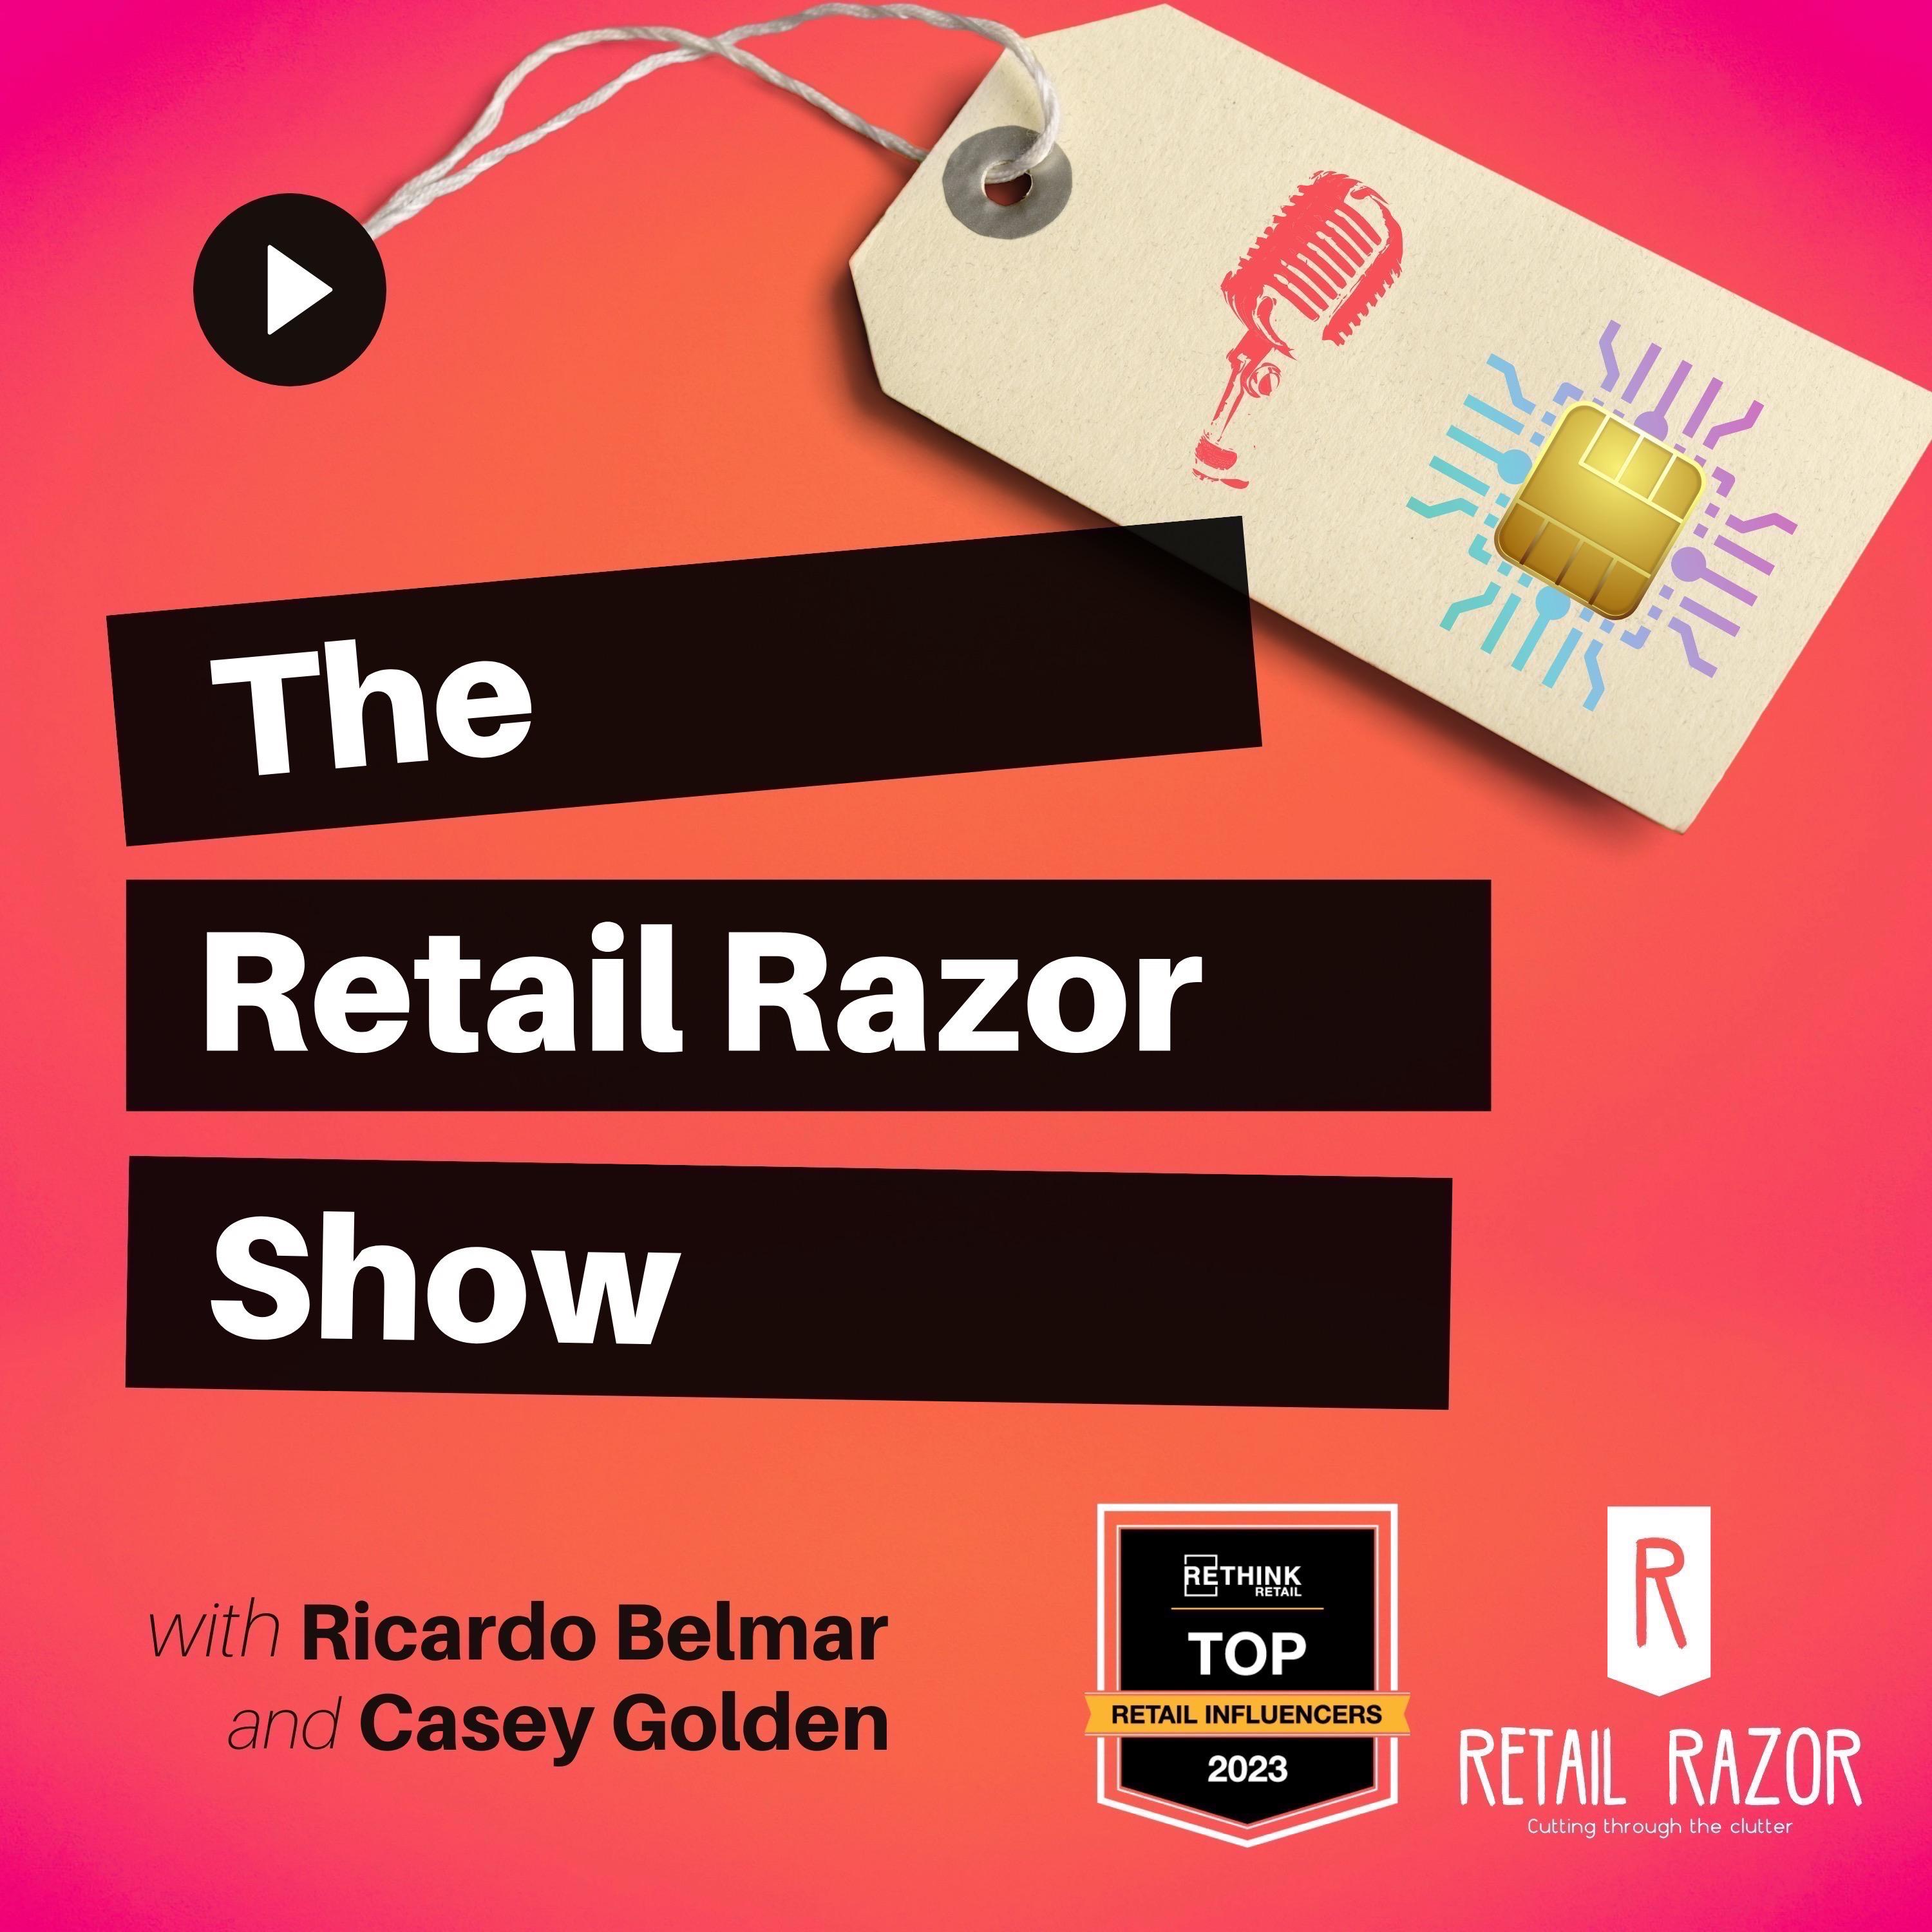 The Retail Razor Show